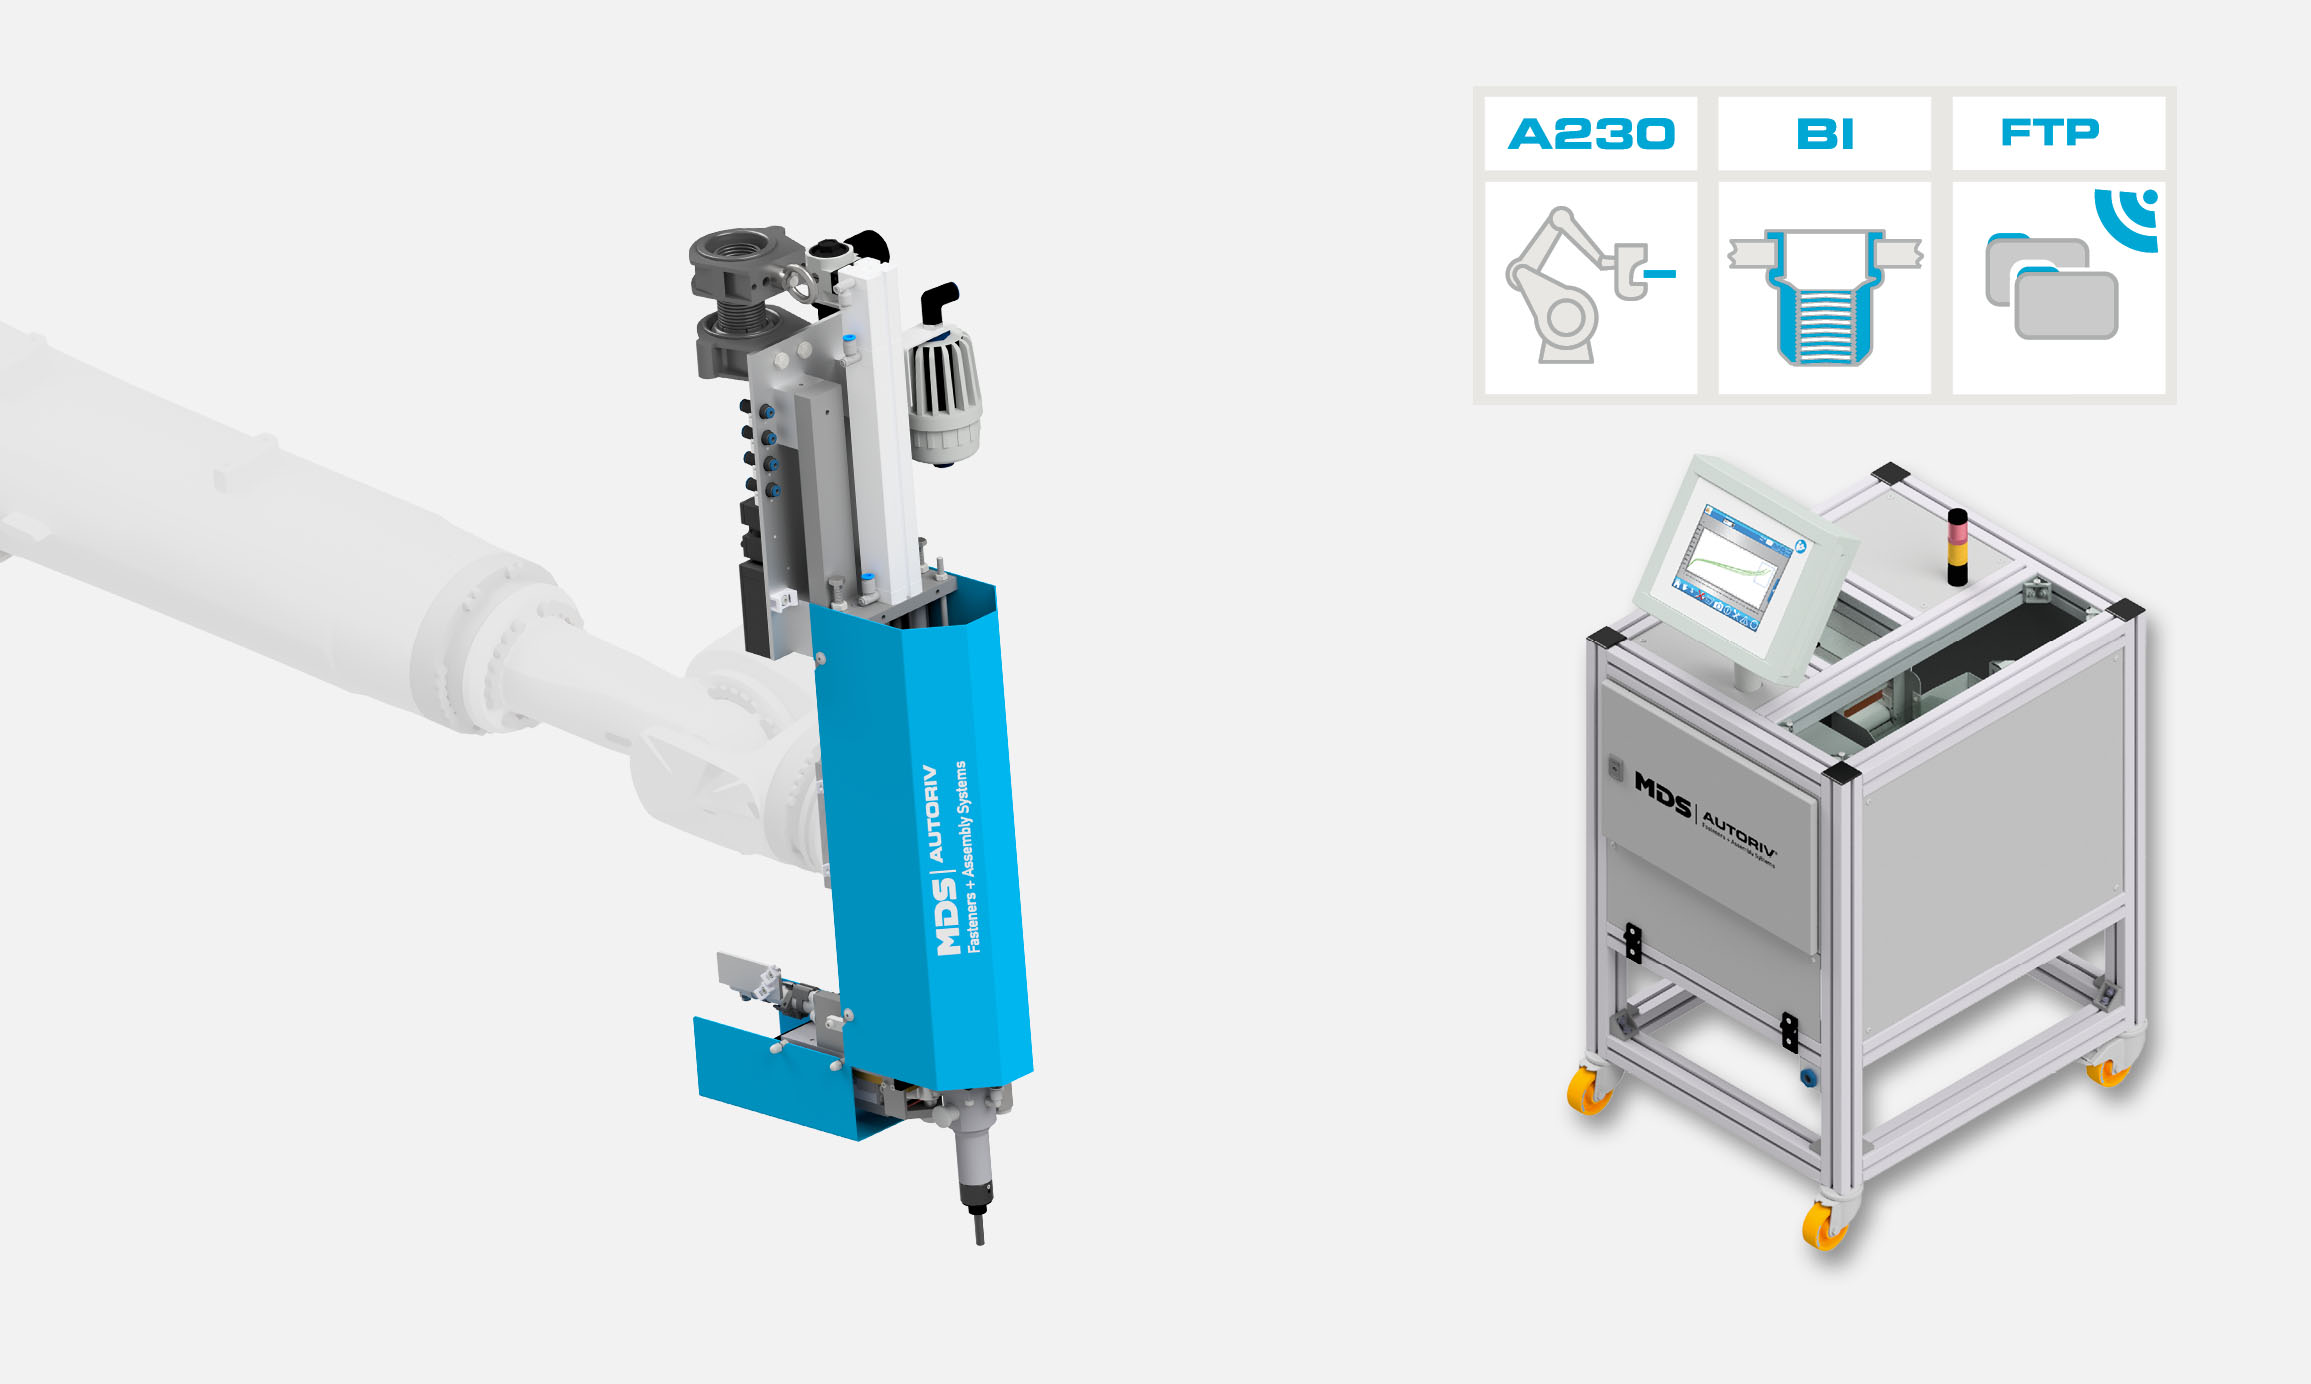 A230-BI robotic tools processing blind rivet fasteners